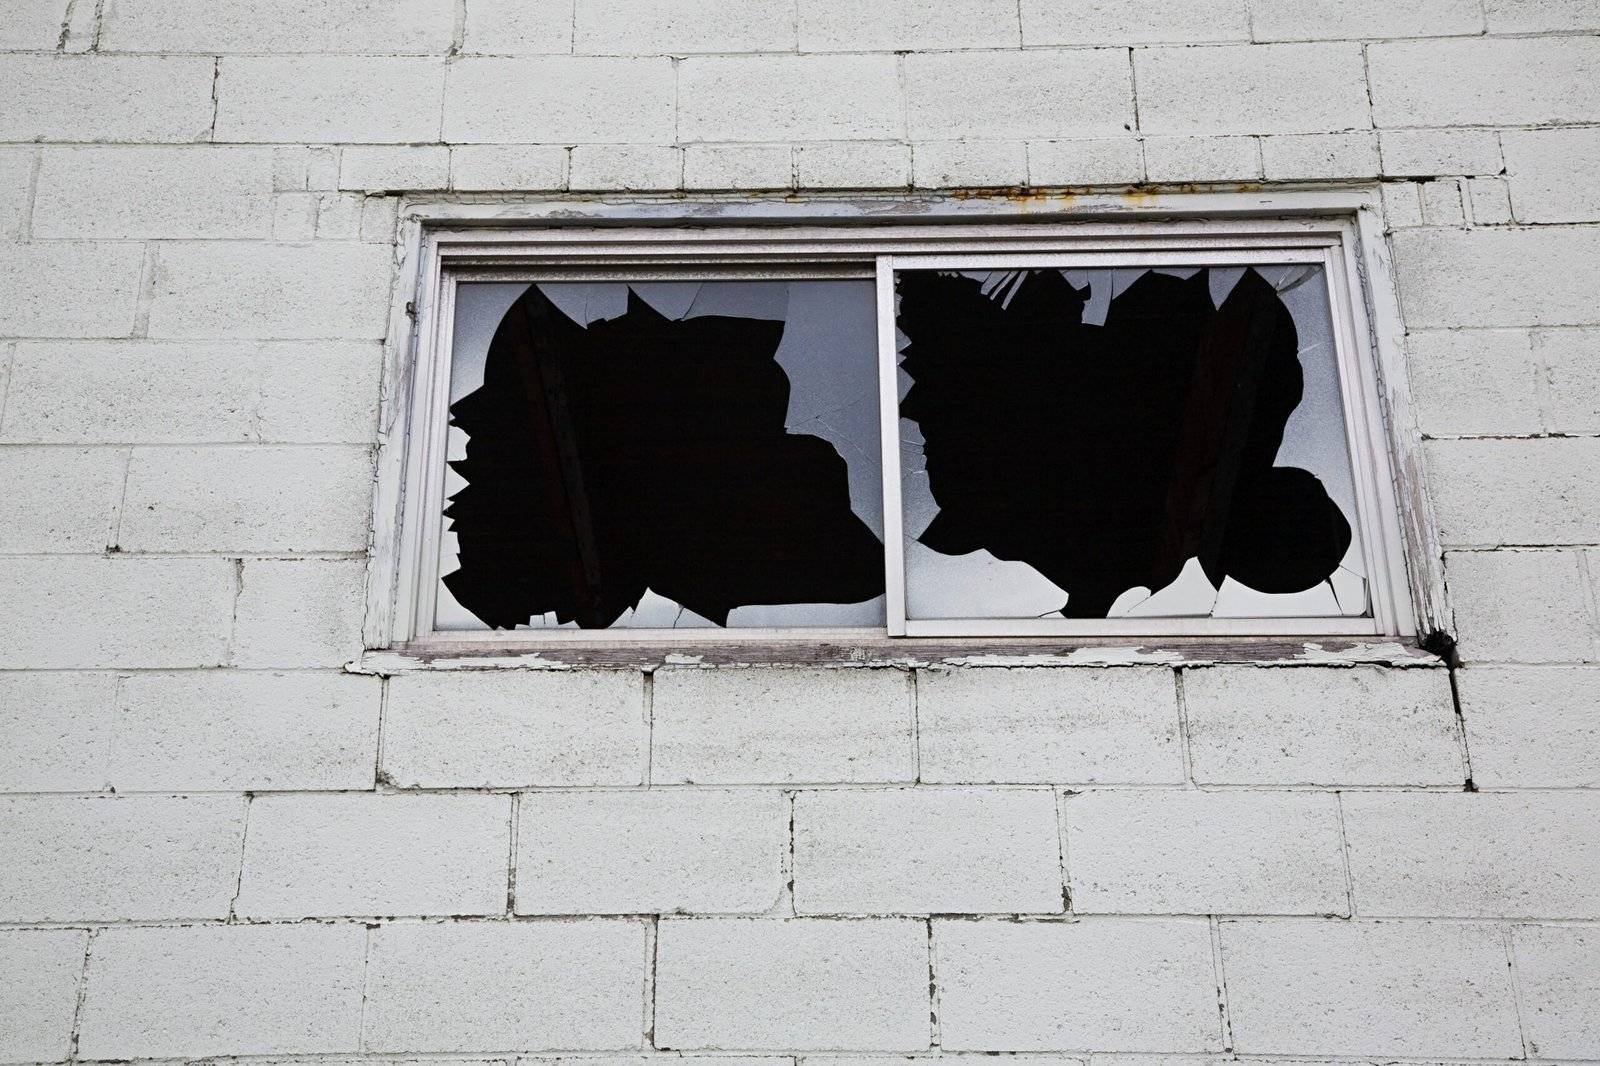 Broken Window housing disrepair claims